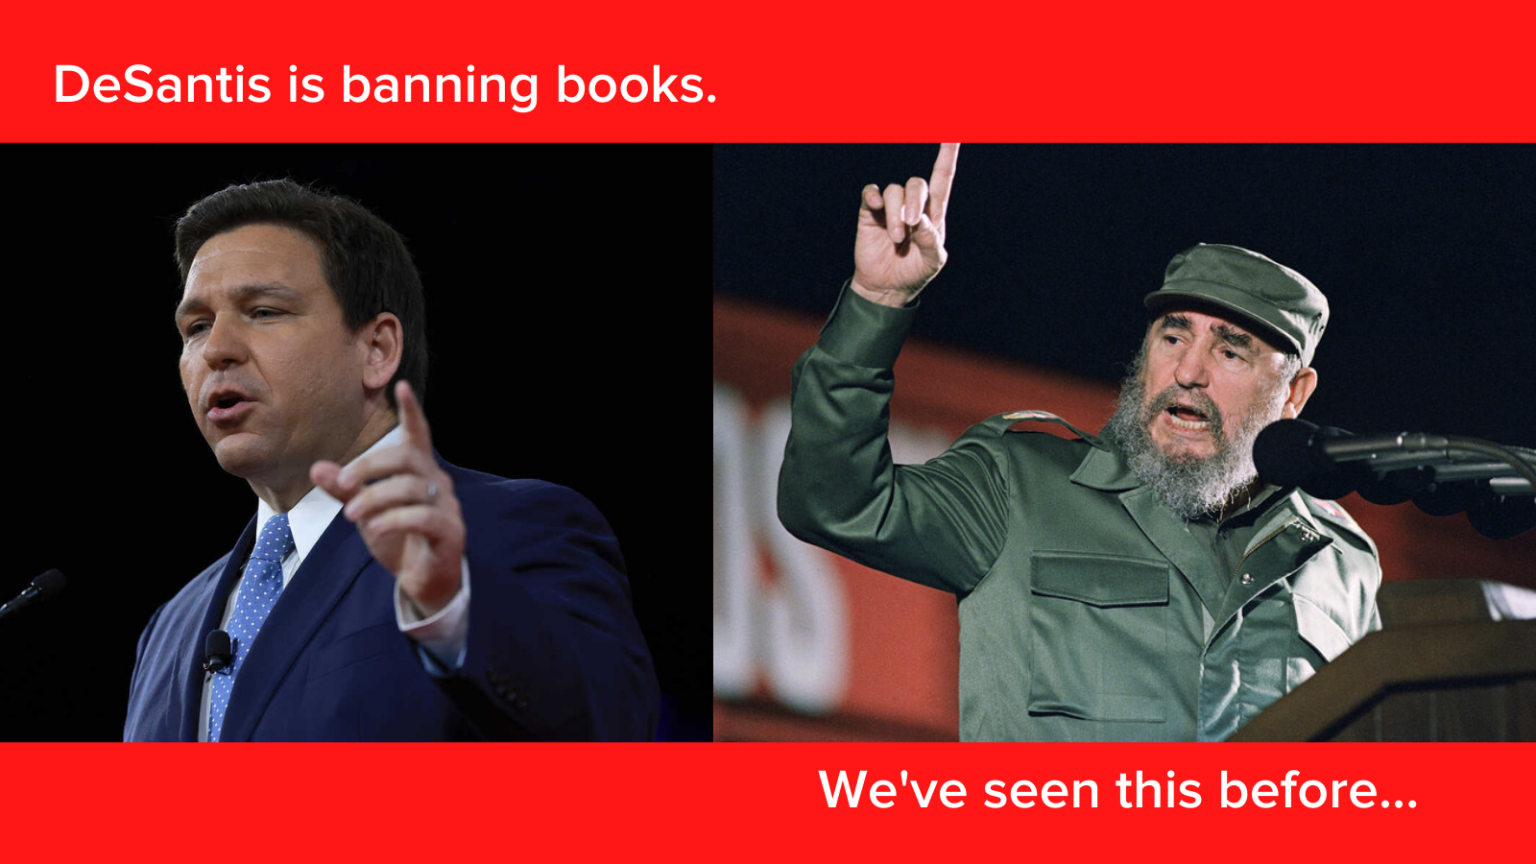 DeSantis come Castro sta vietando i libri